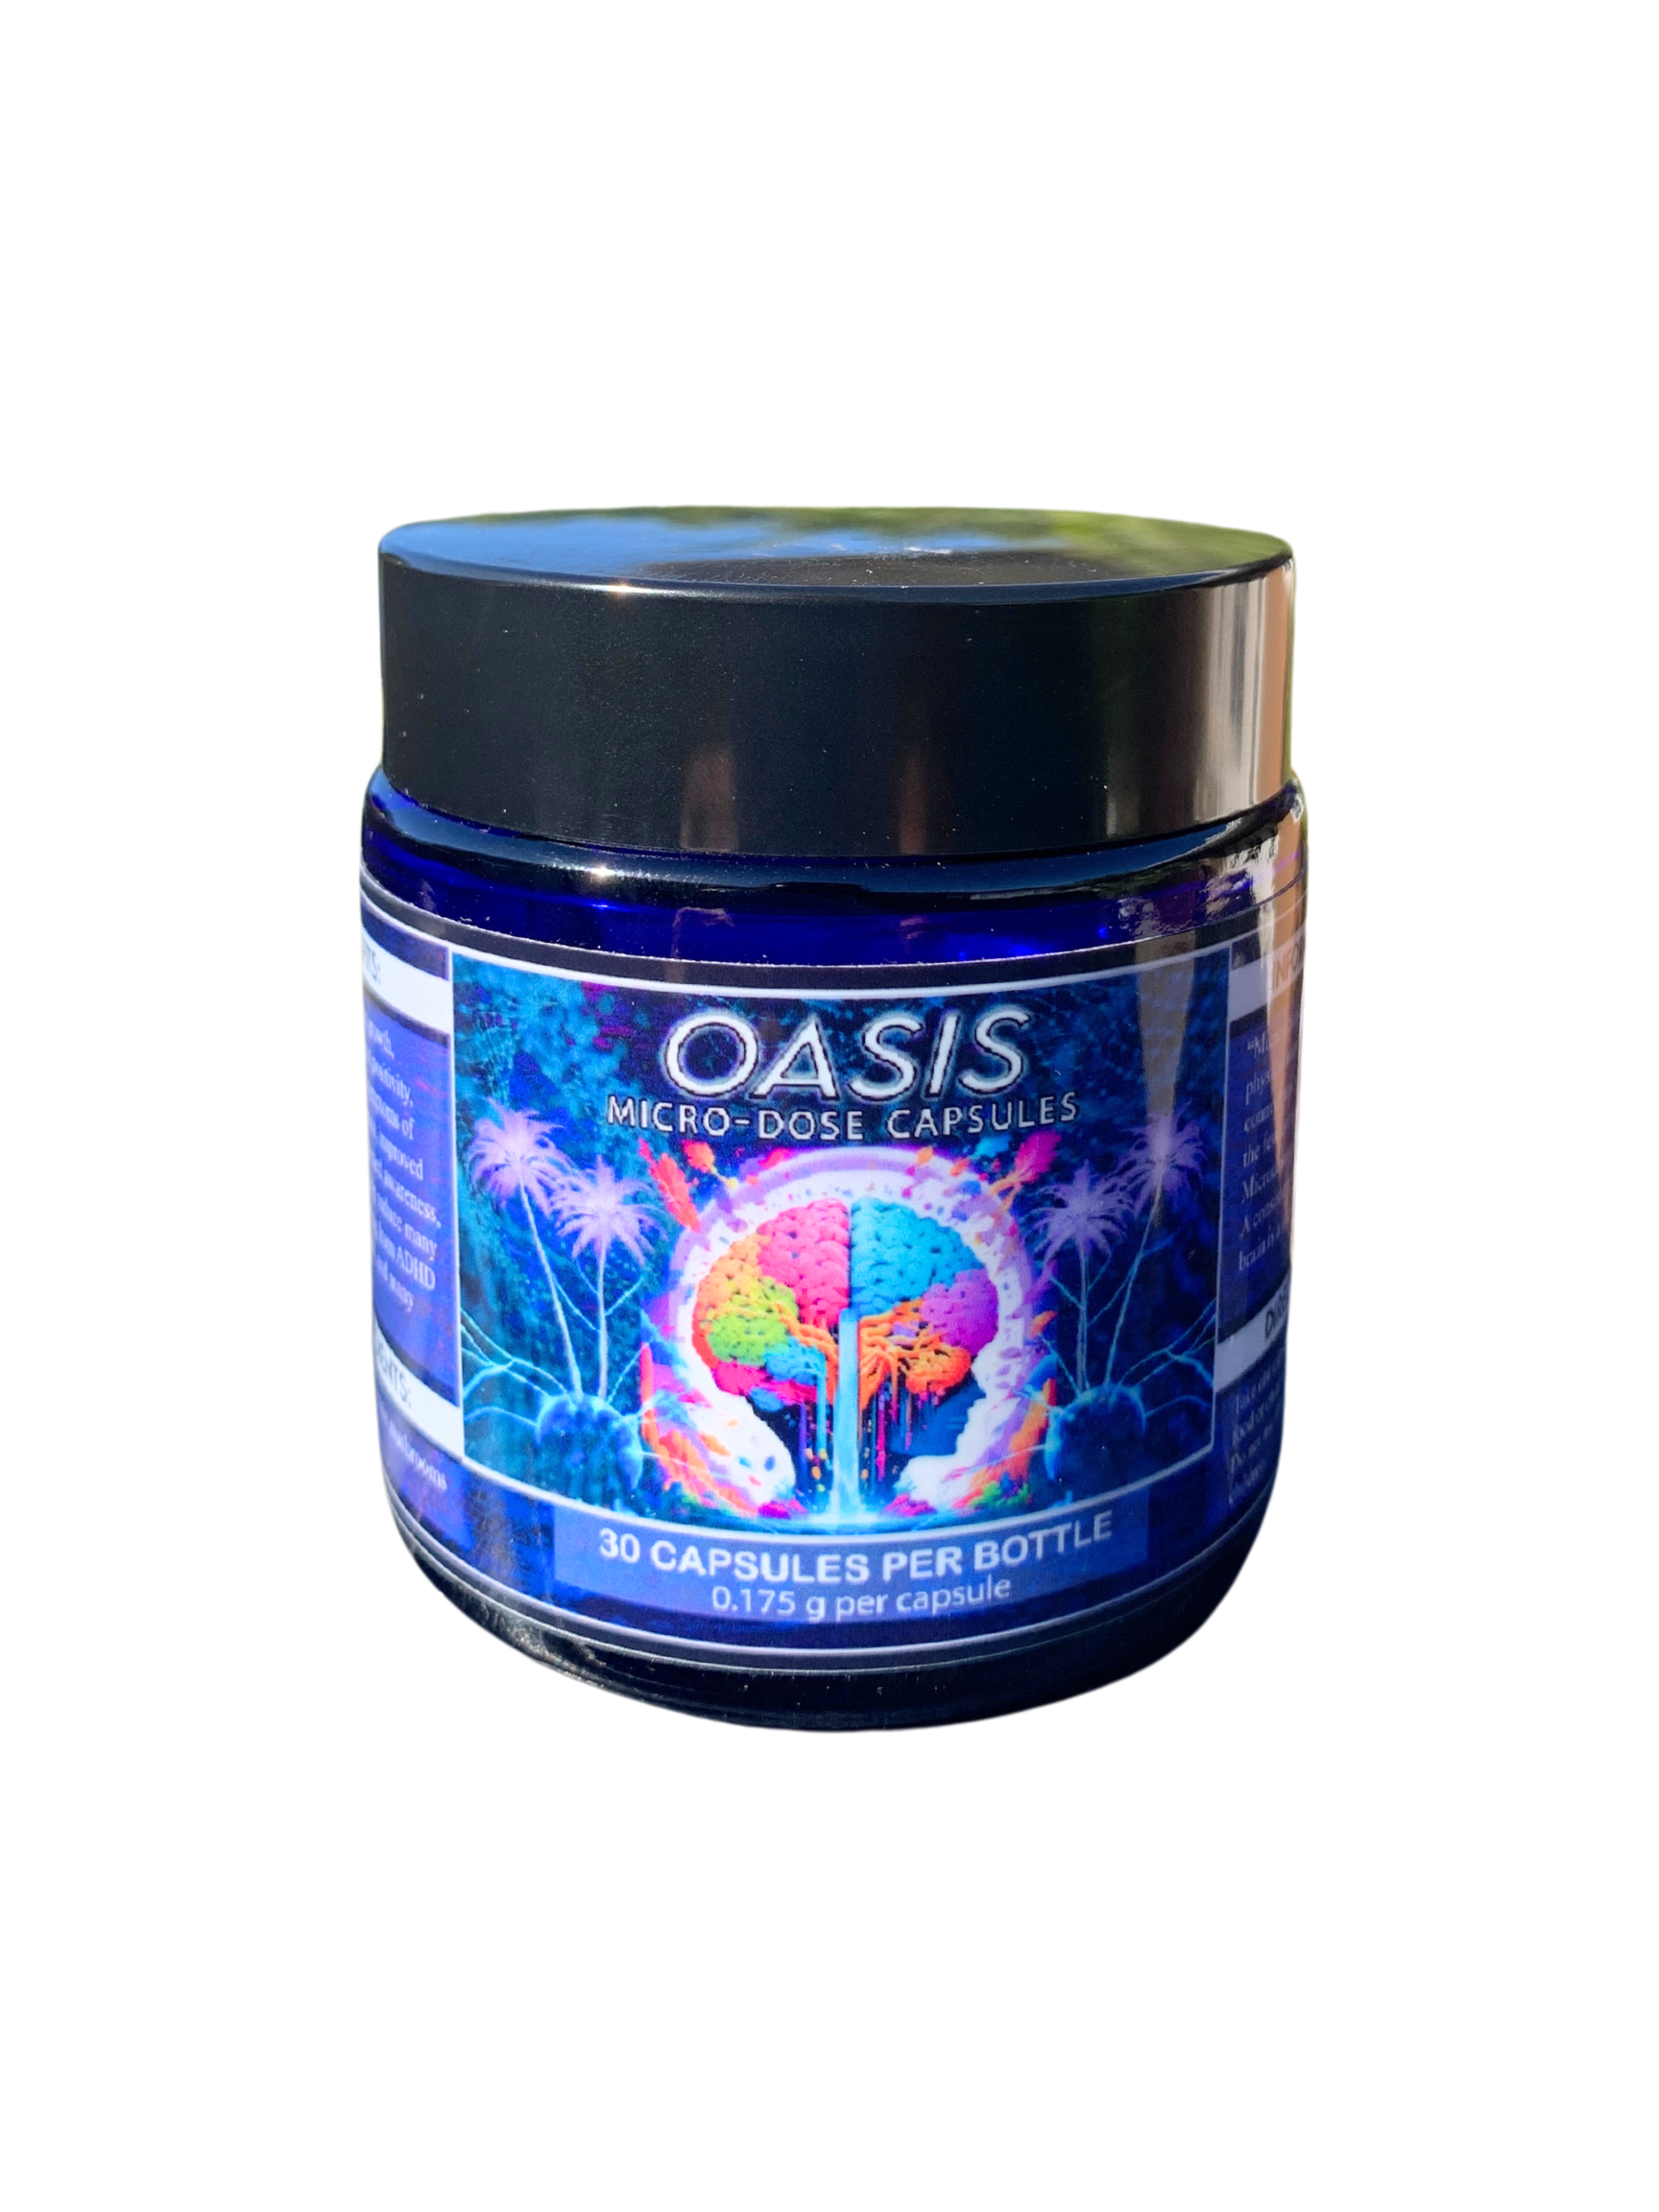 Oasis Micro-dose Capsules